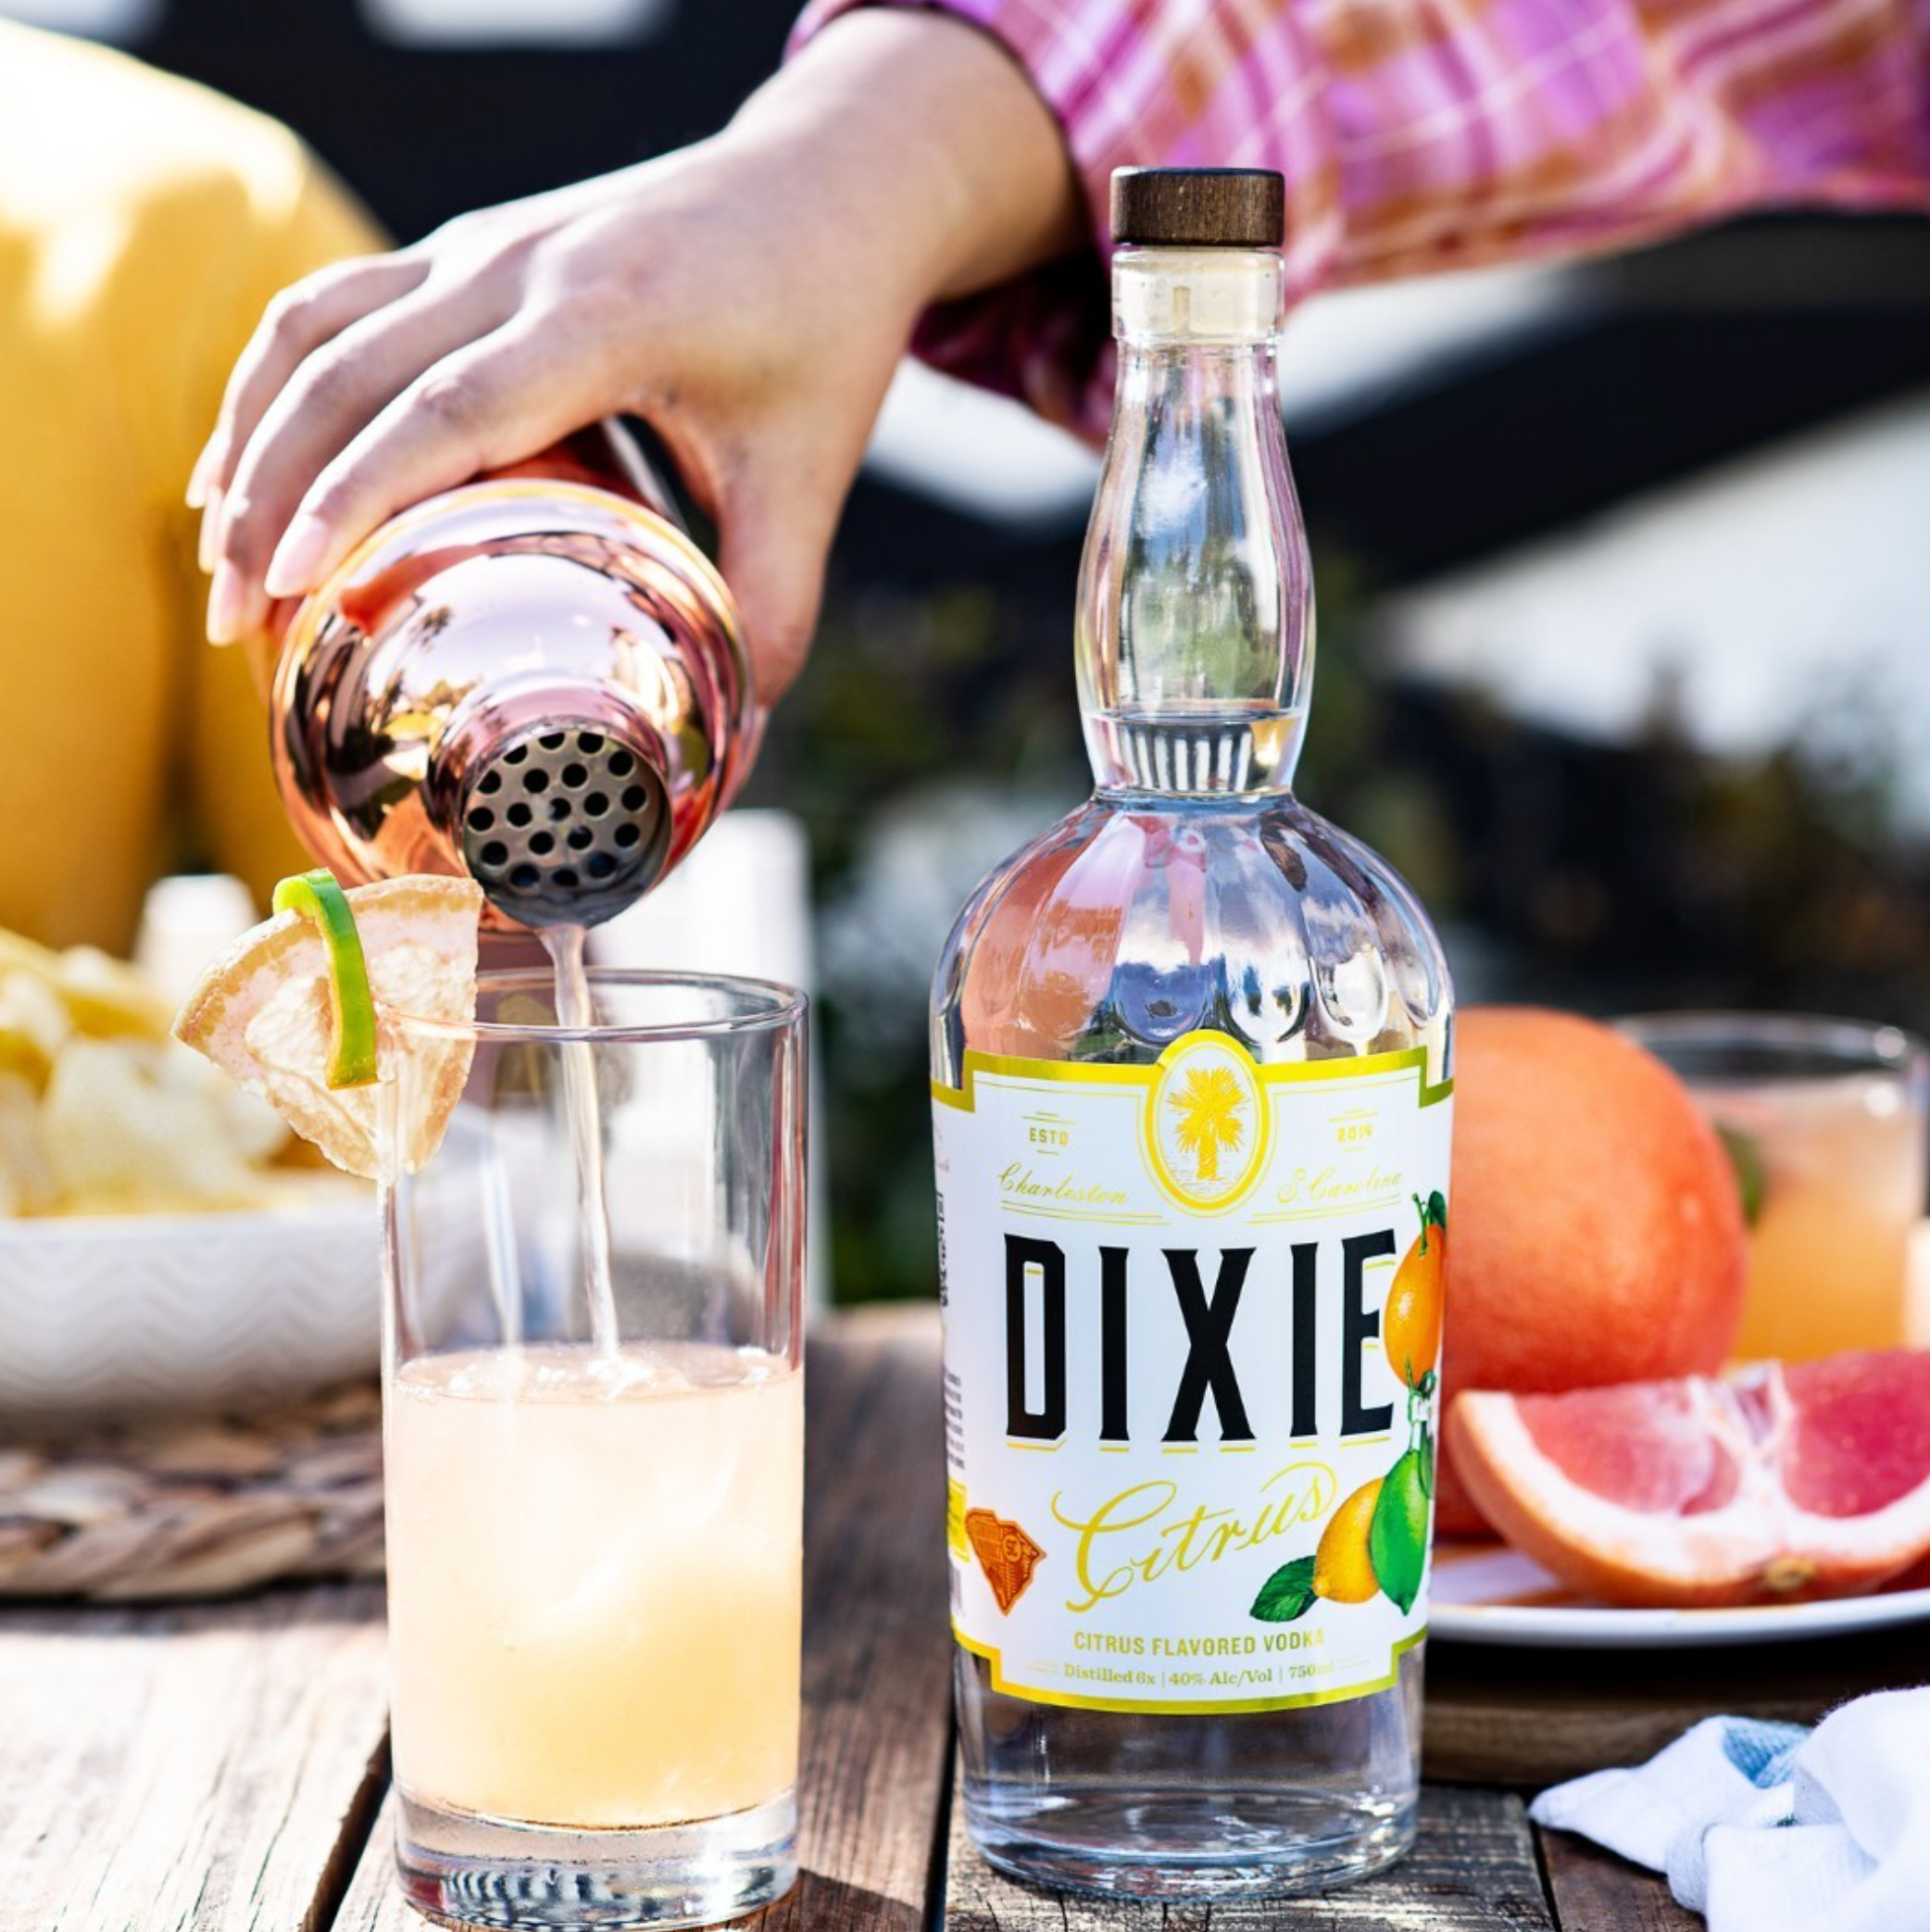 Dixie Citrus Flavored Vodka